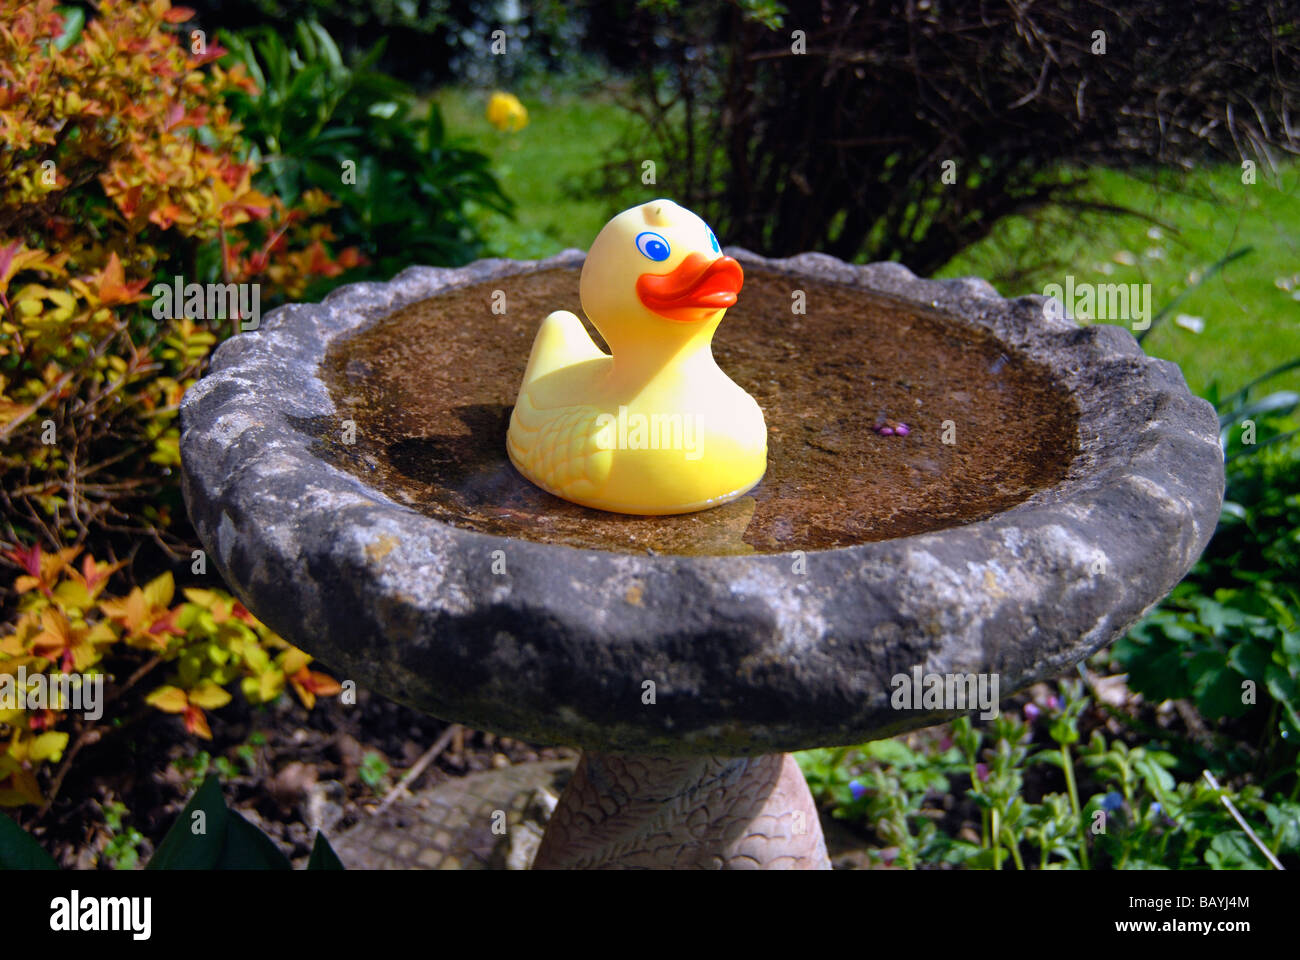 Yellow rubber duck swimming in bird bath Stock Photo